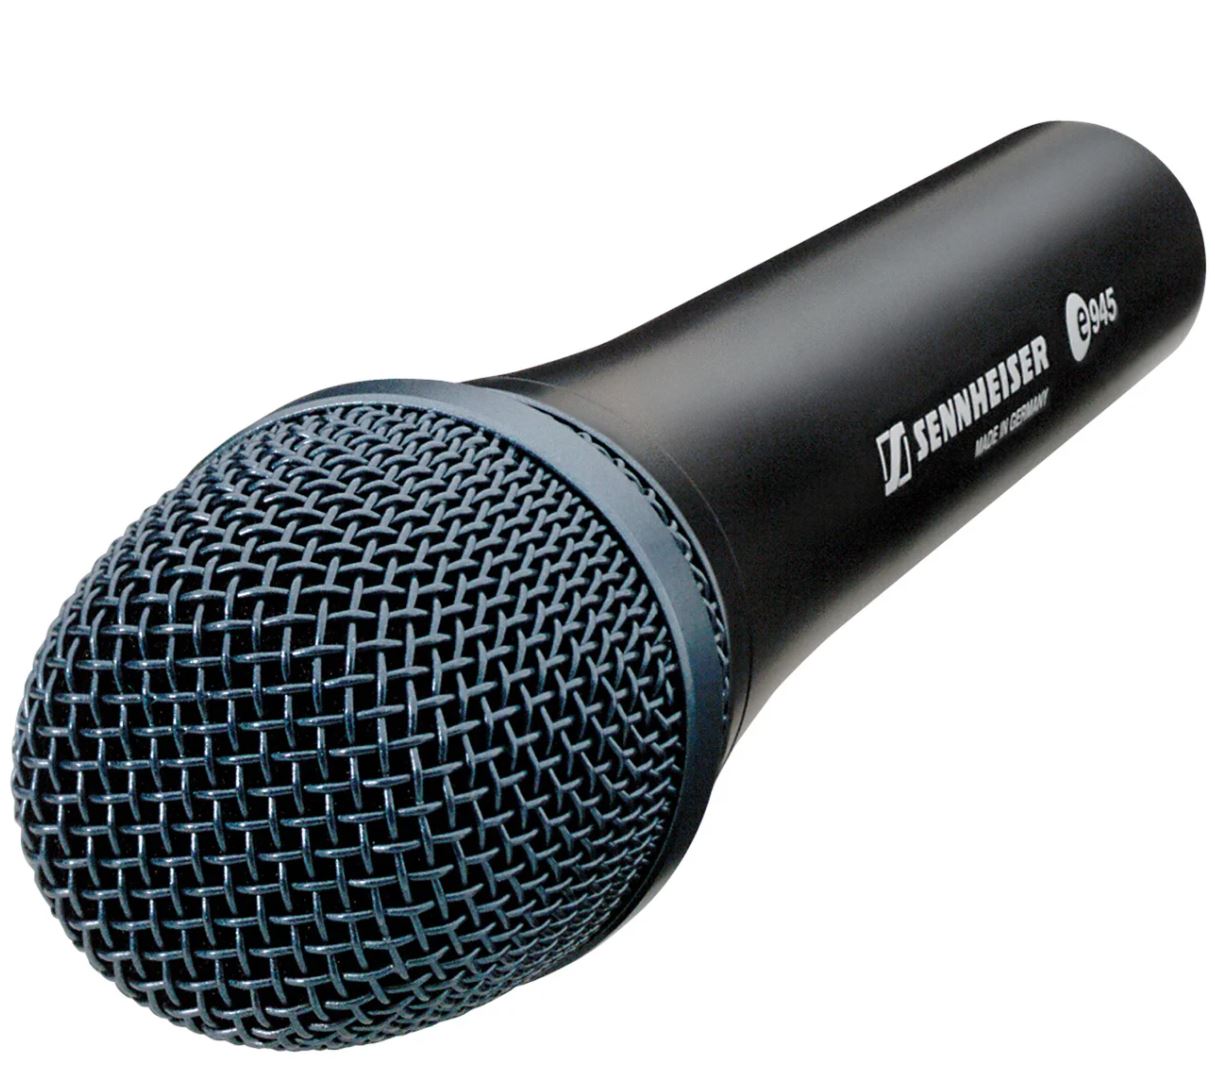 Sennheiser E945 Supercardioid Dynamic Handheld Vocal Microphone